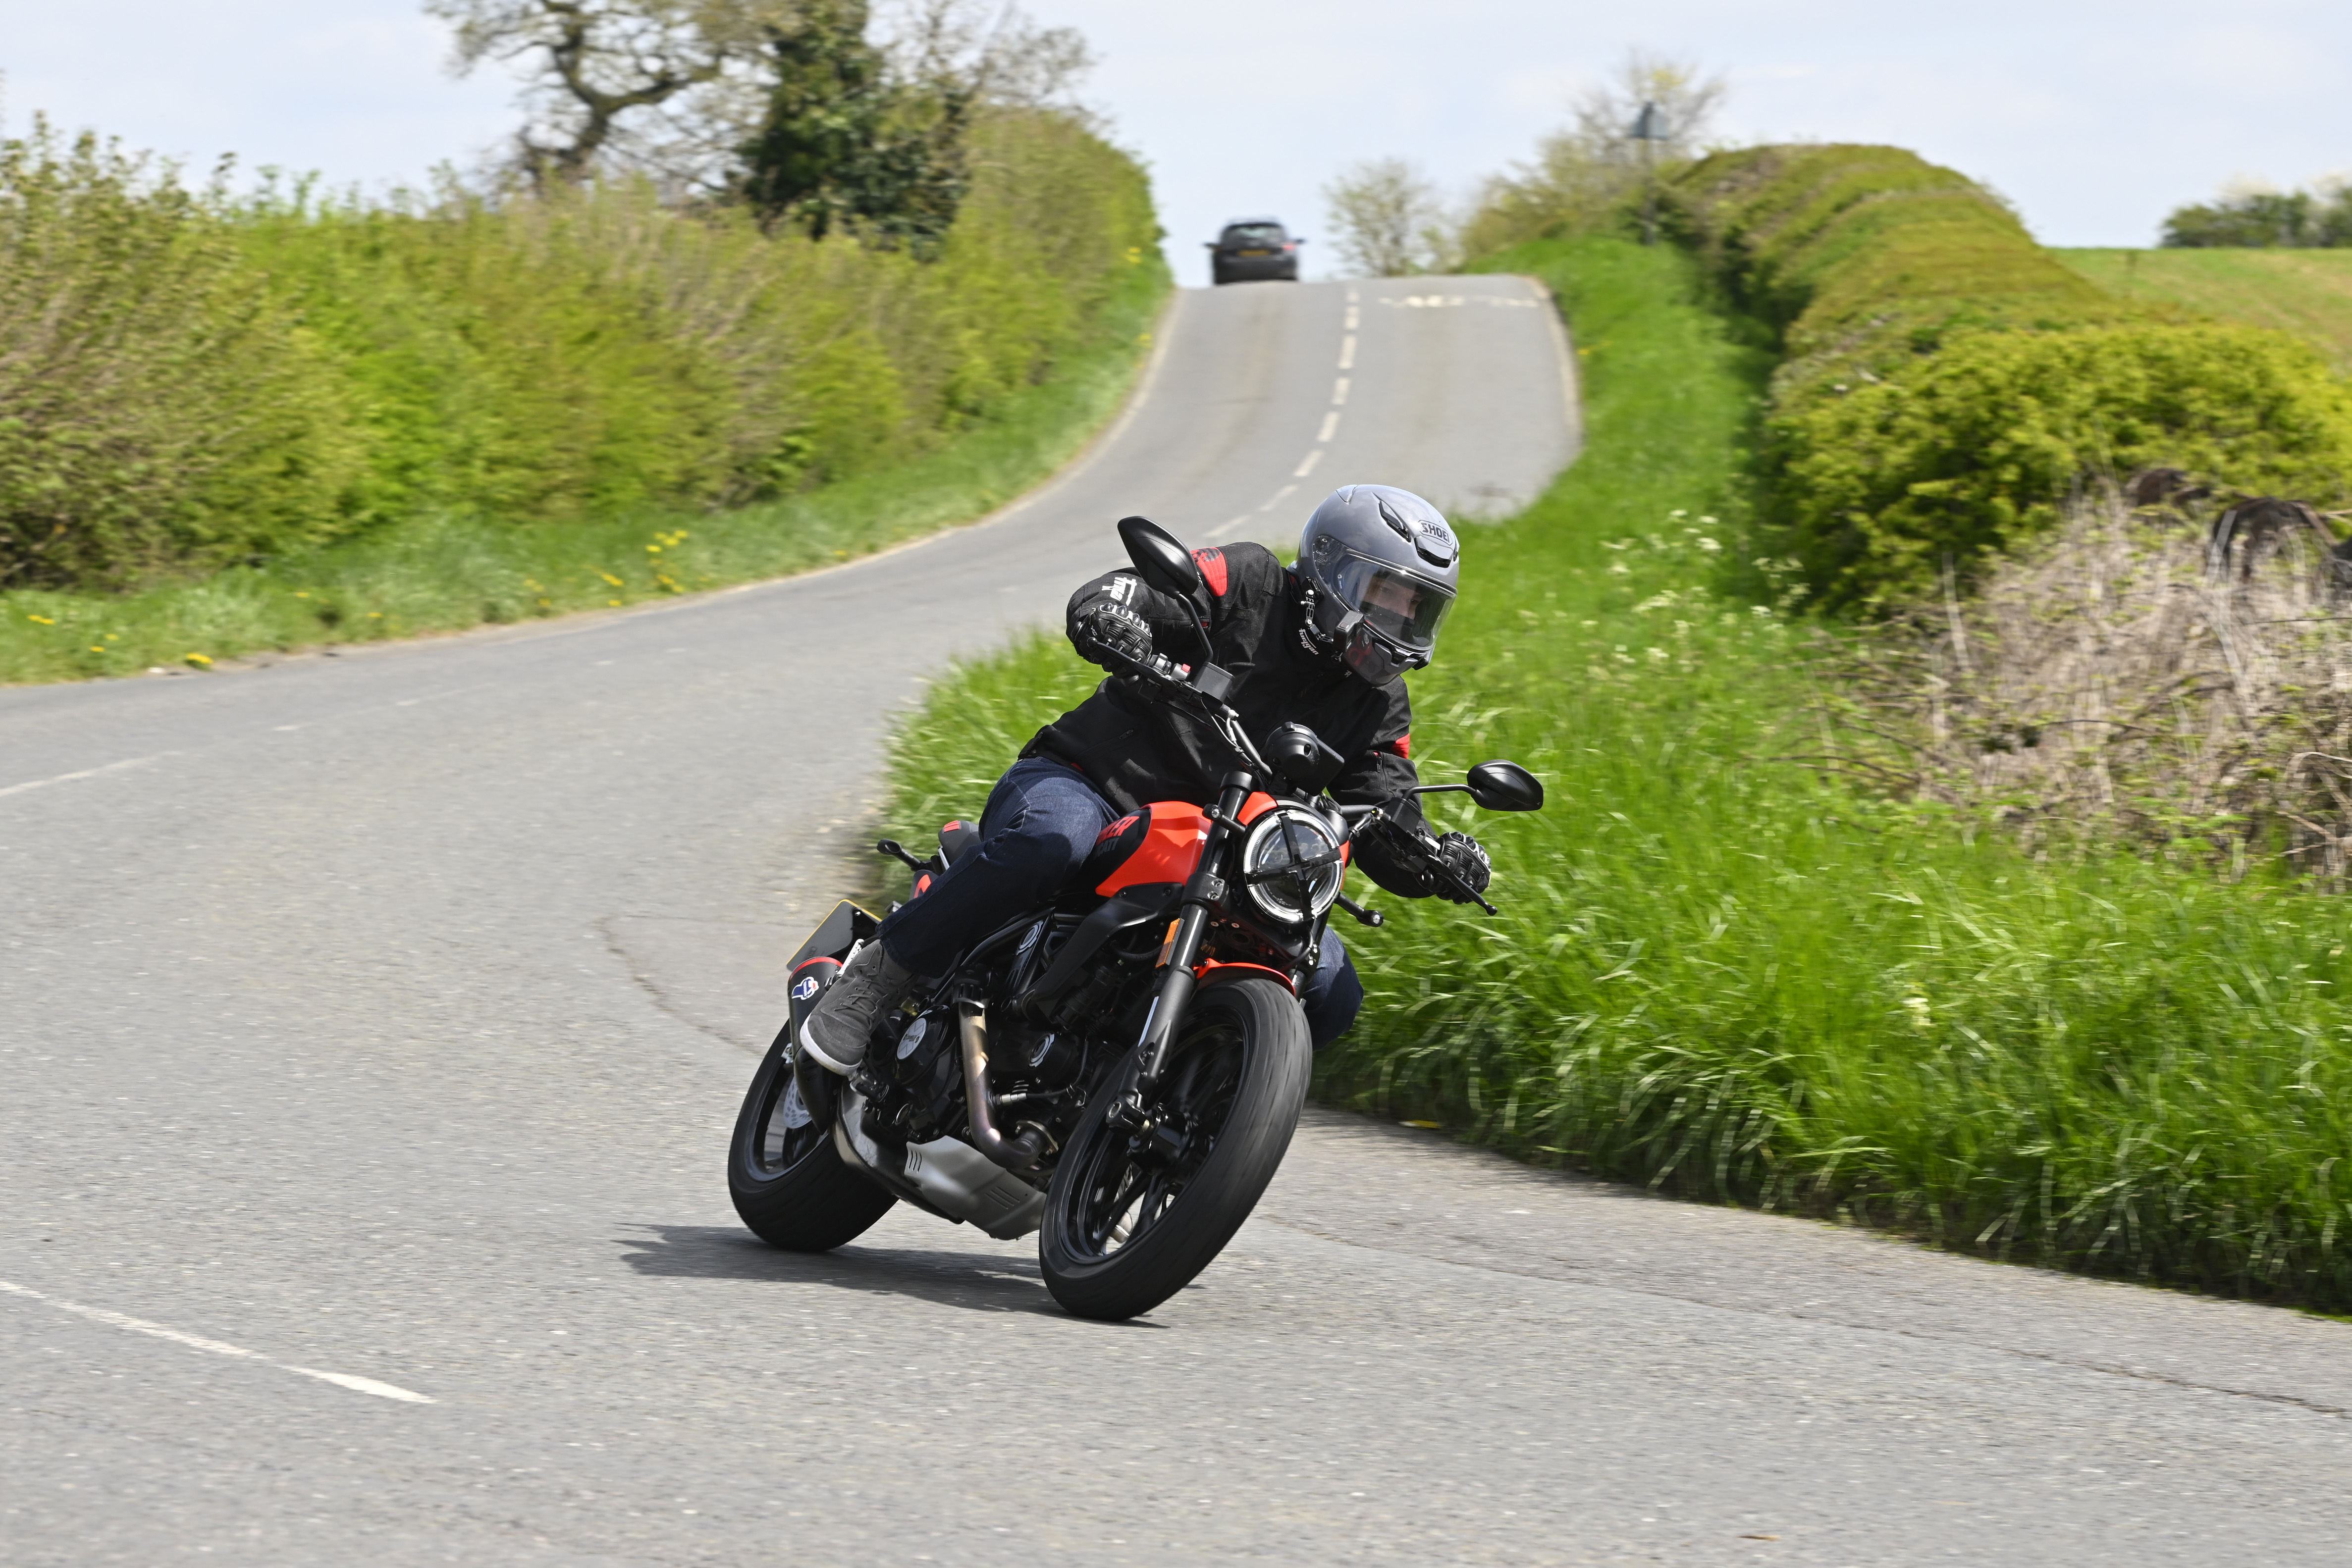 Ride review of the Ducati Scrambler Full Throttle on UK roads